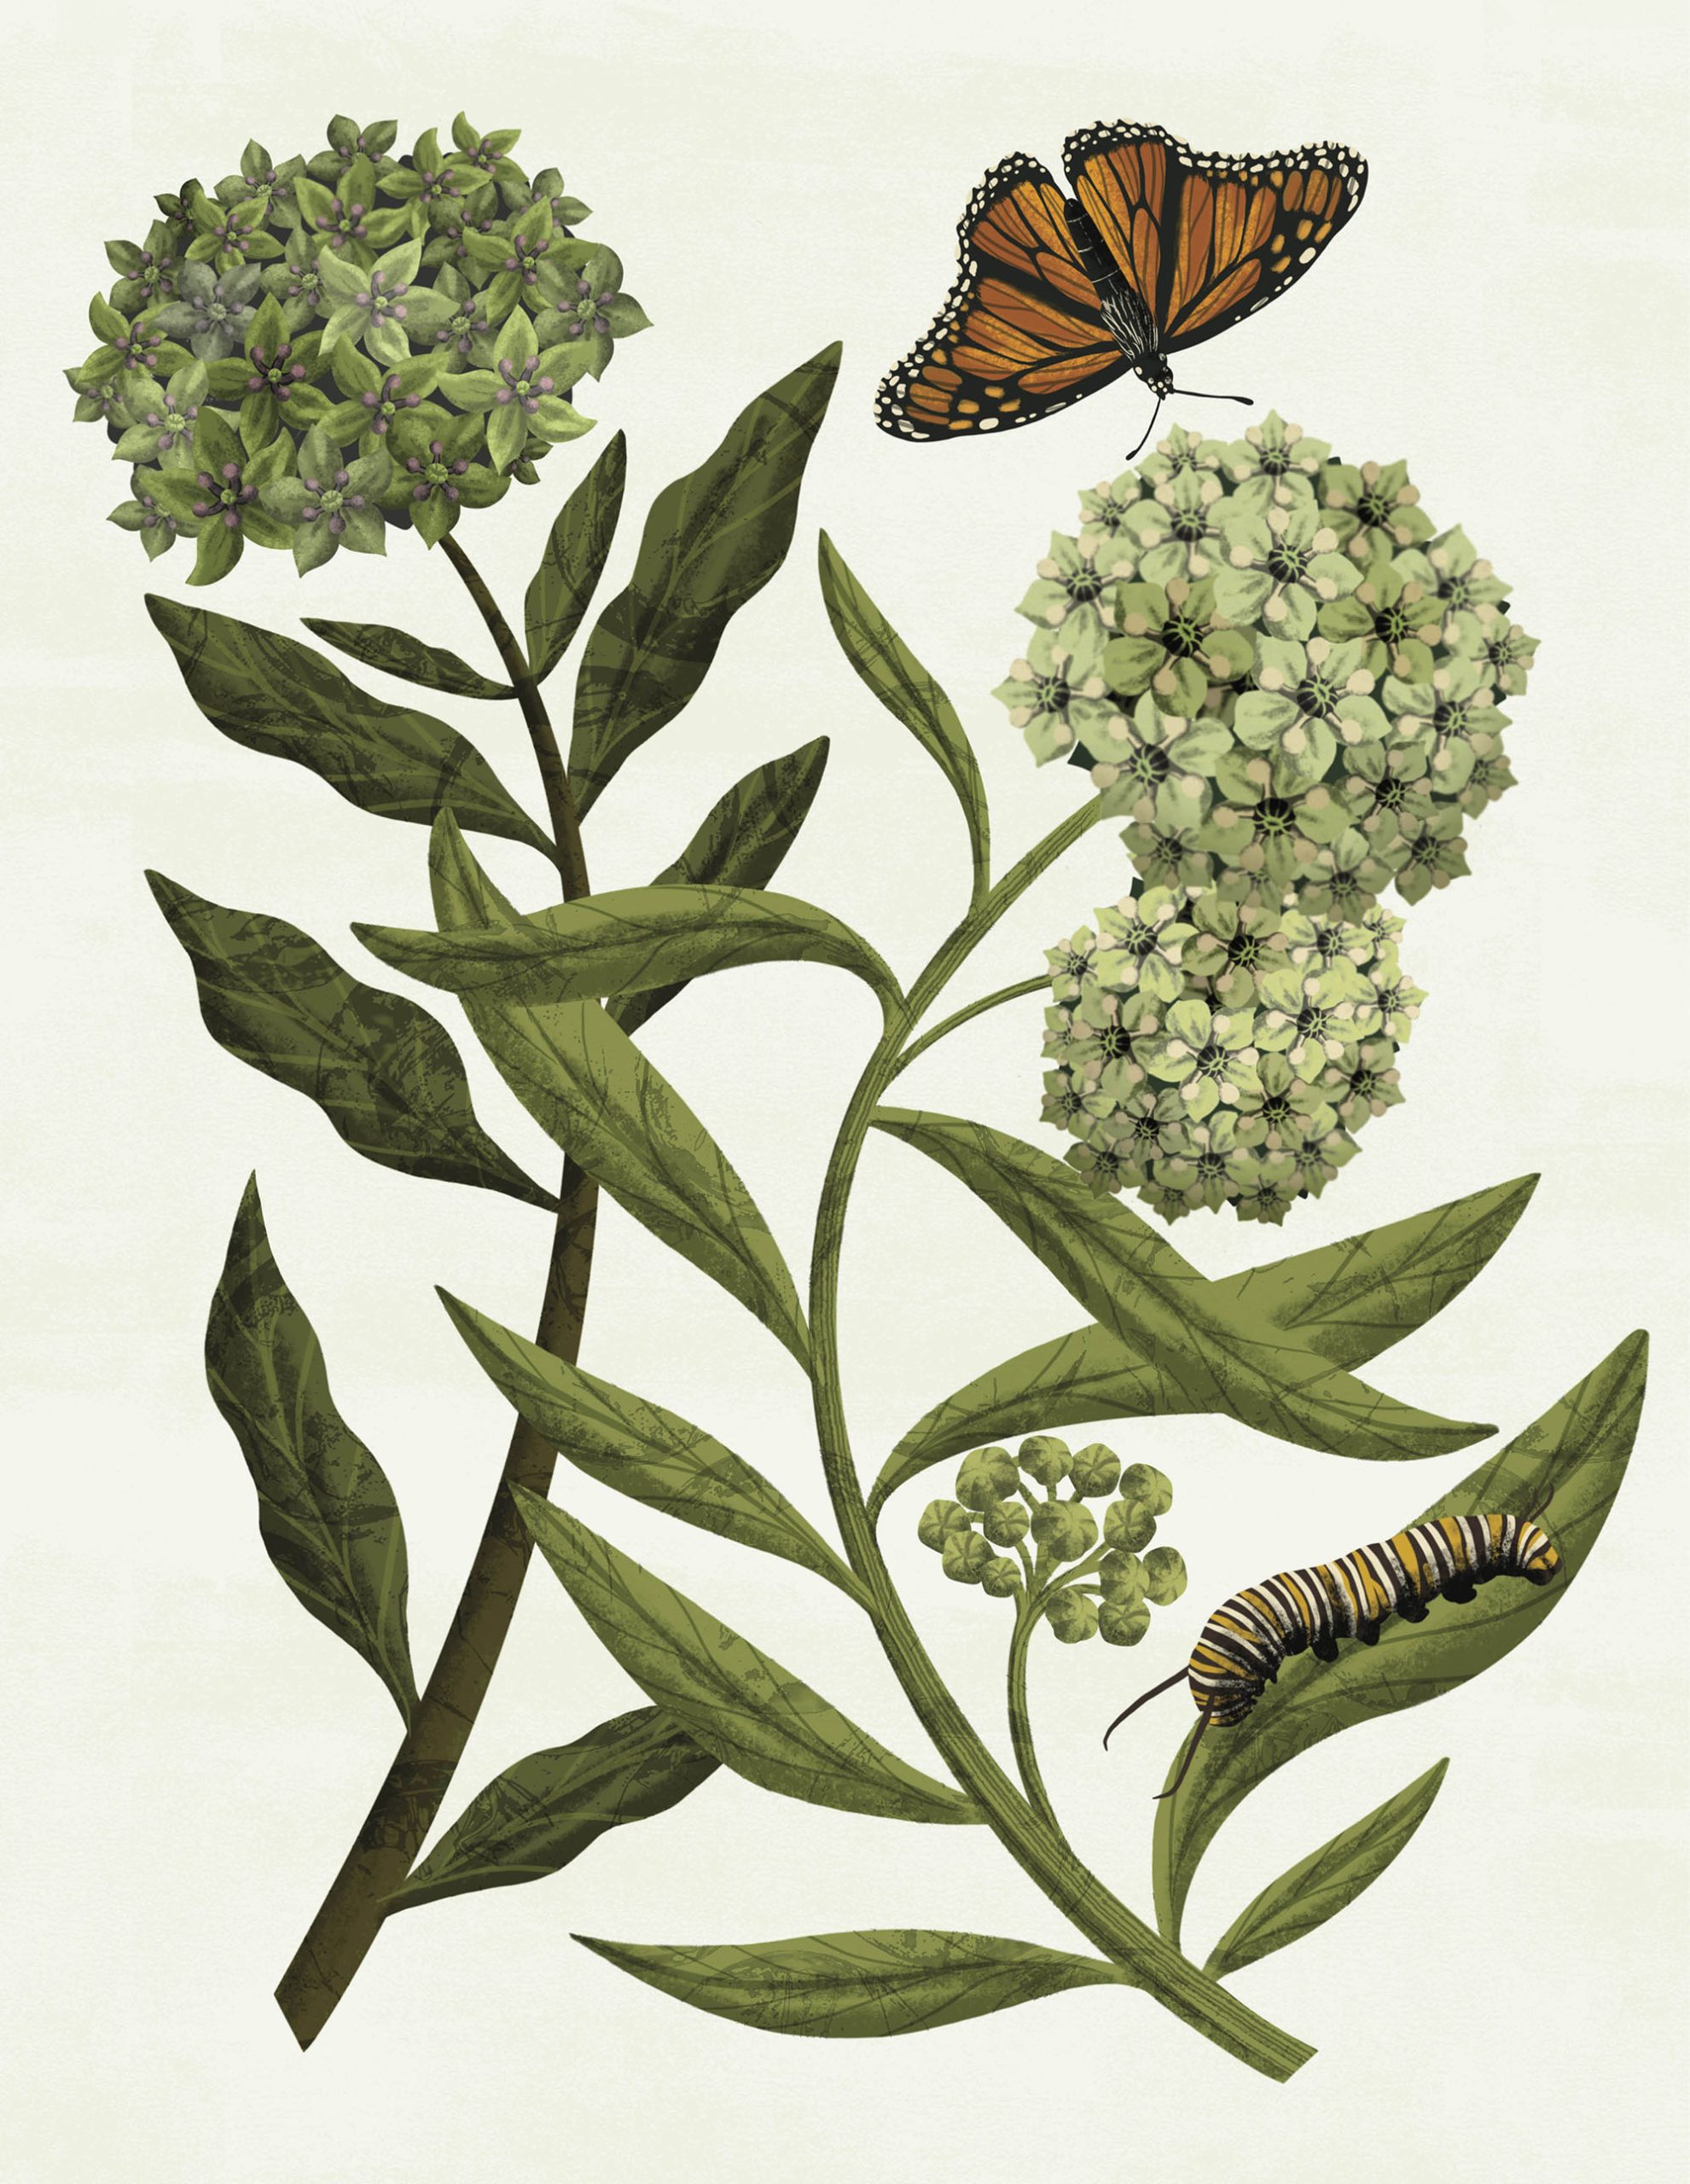 An illustration of two green milkweed plants